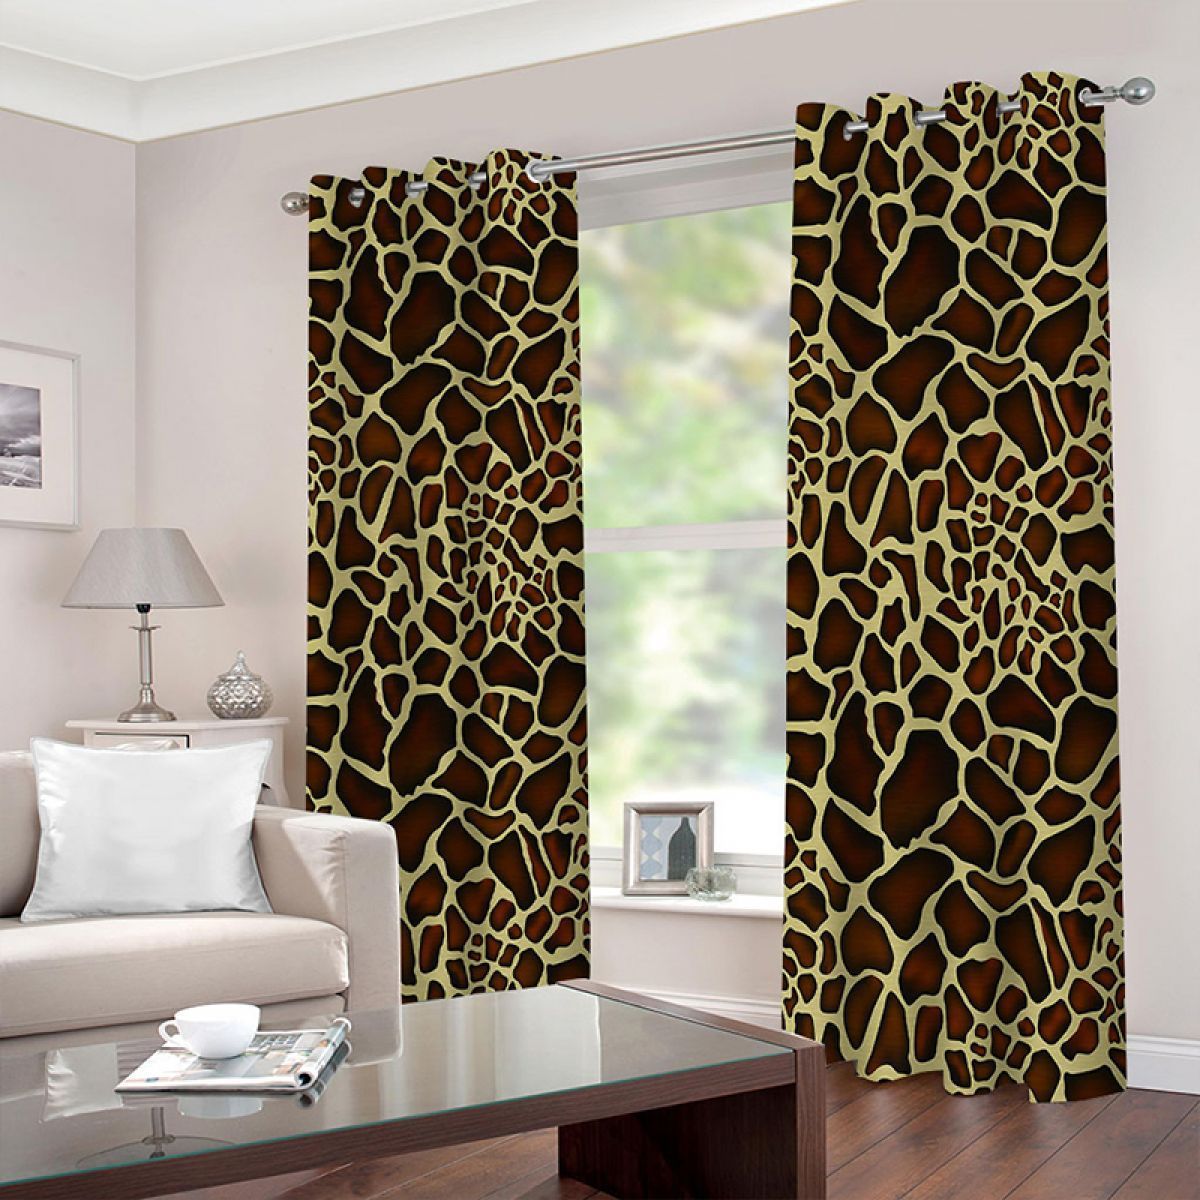 3d Giraffe Texture Printed Window Curtain Home Decor